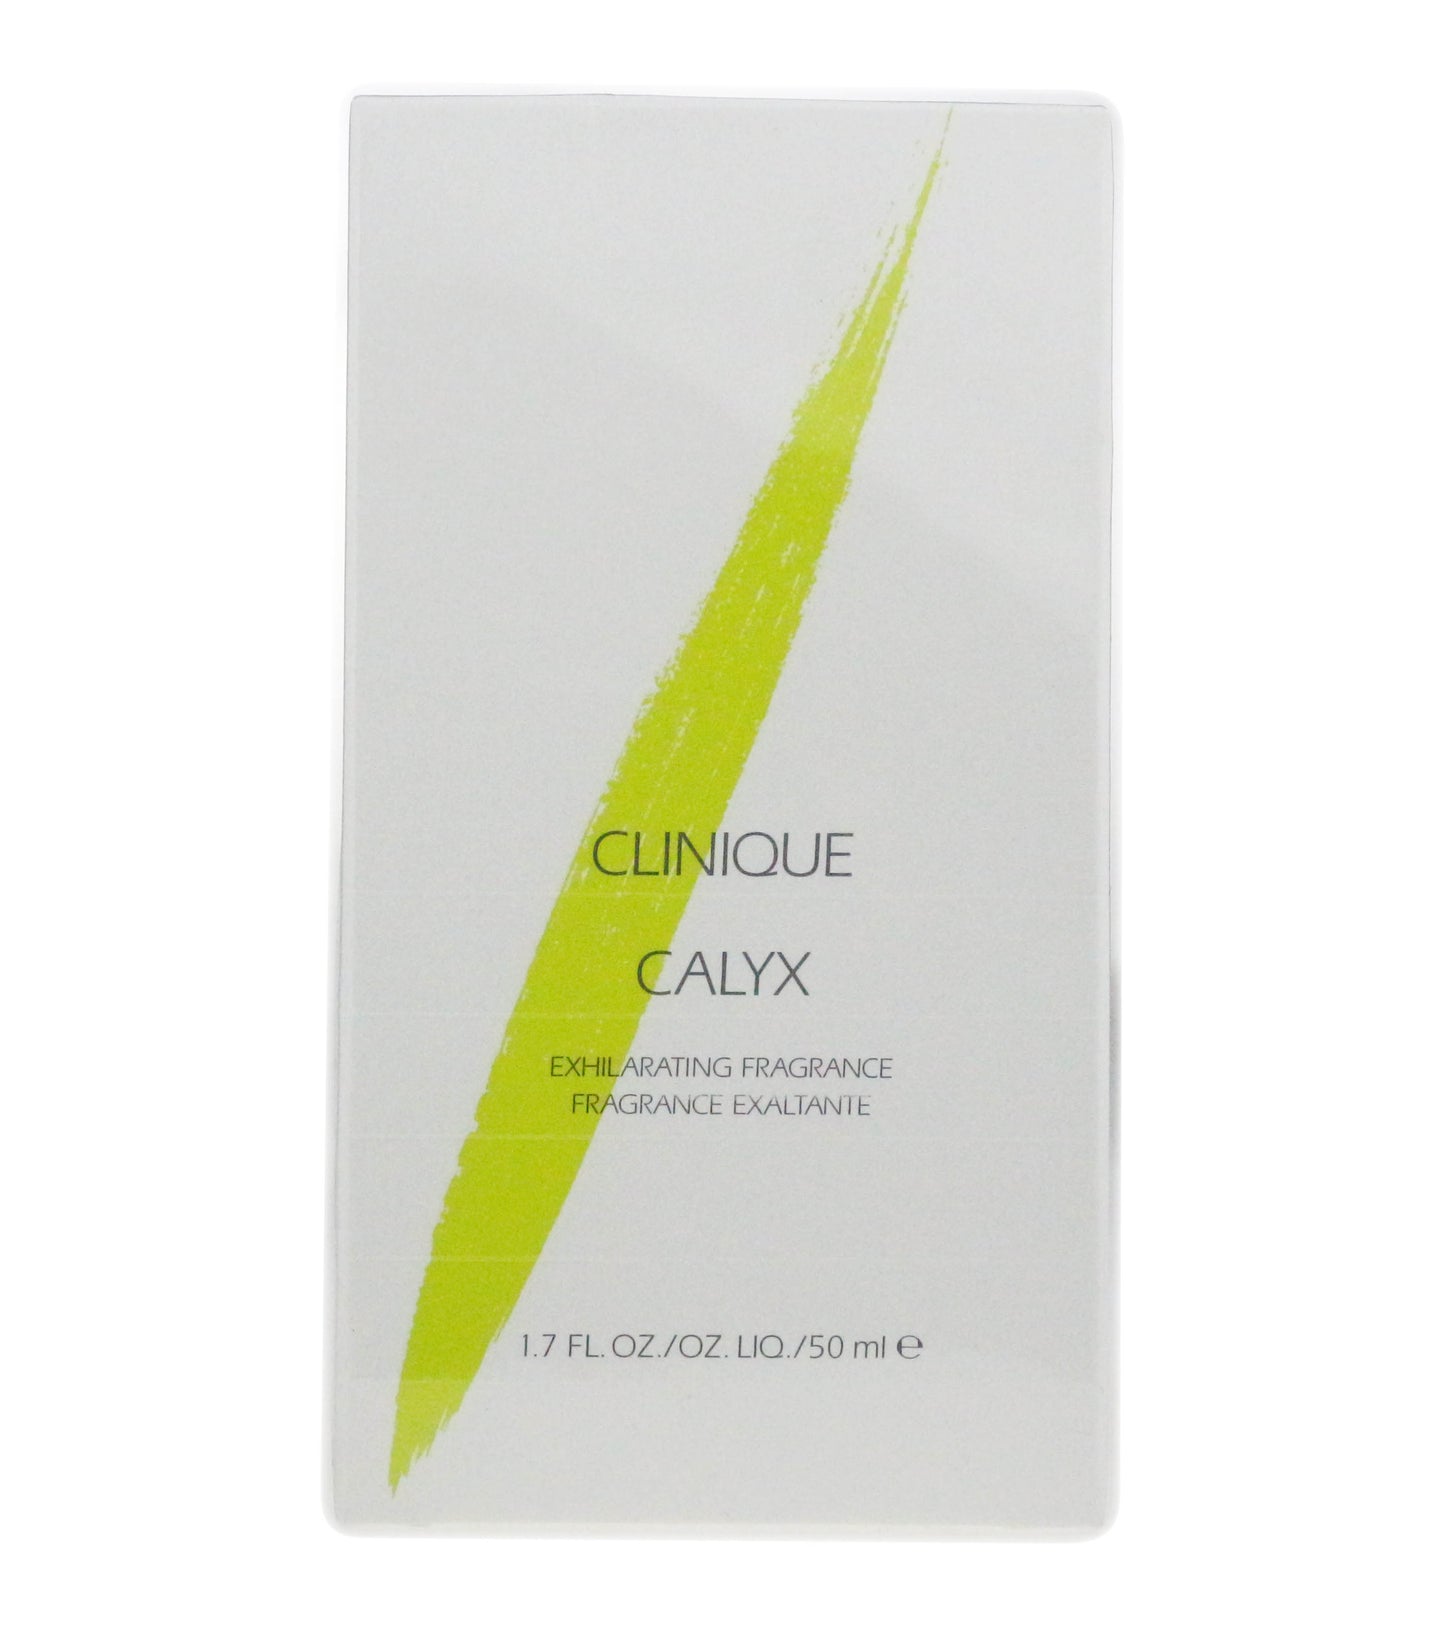 Clinique Calyx Exhilarating Fragrance 1.7 oz/50ml New In Box